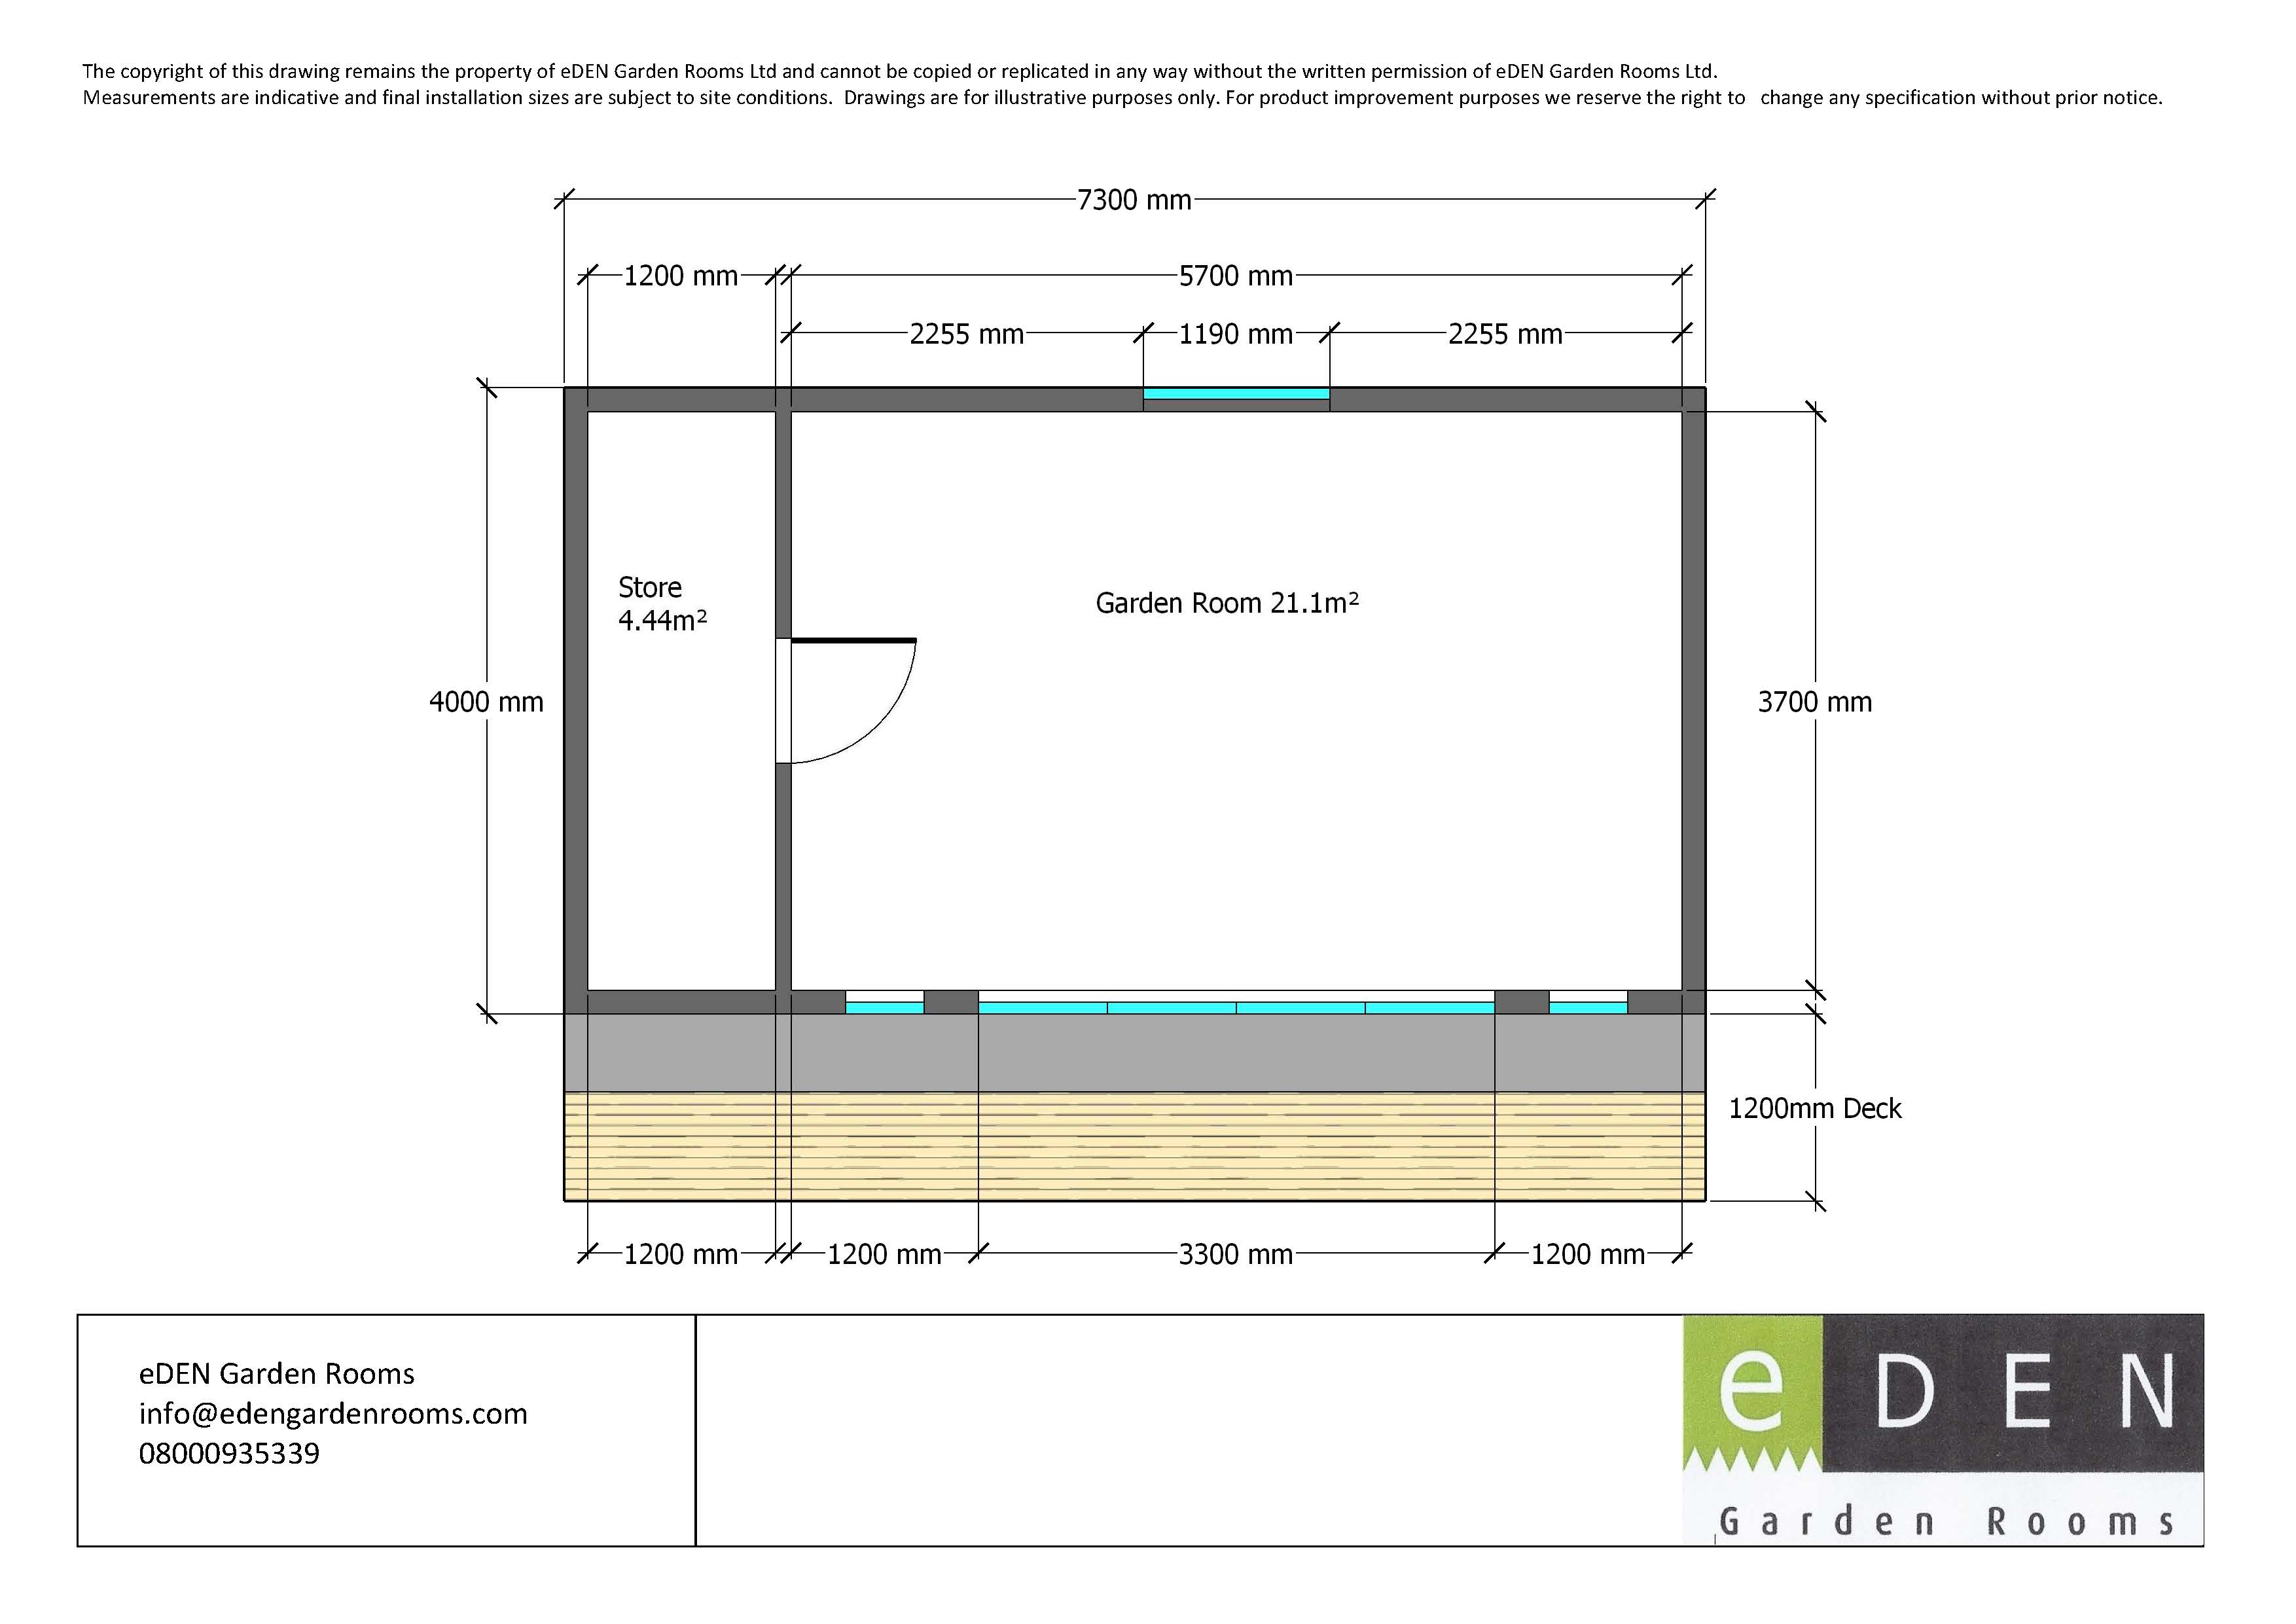 Floorplan for a garden room with storage room by eDEN Garden Rooms